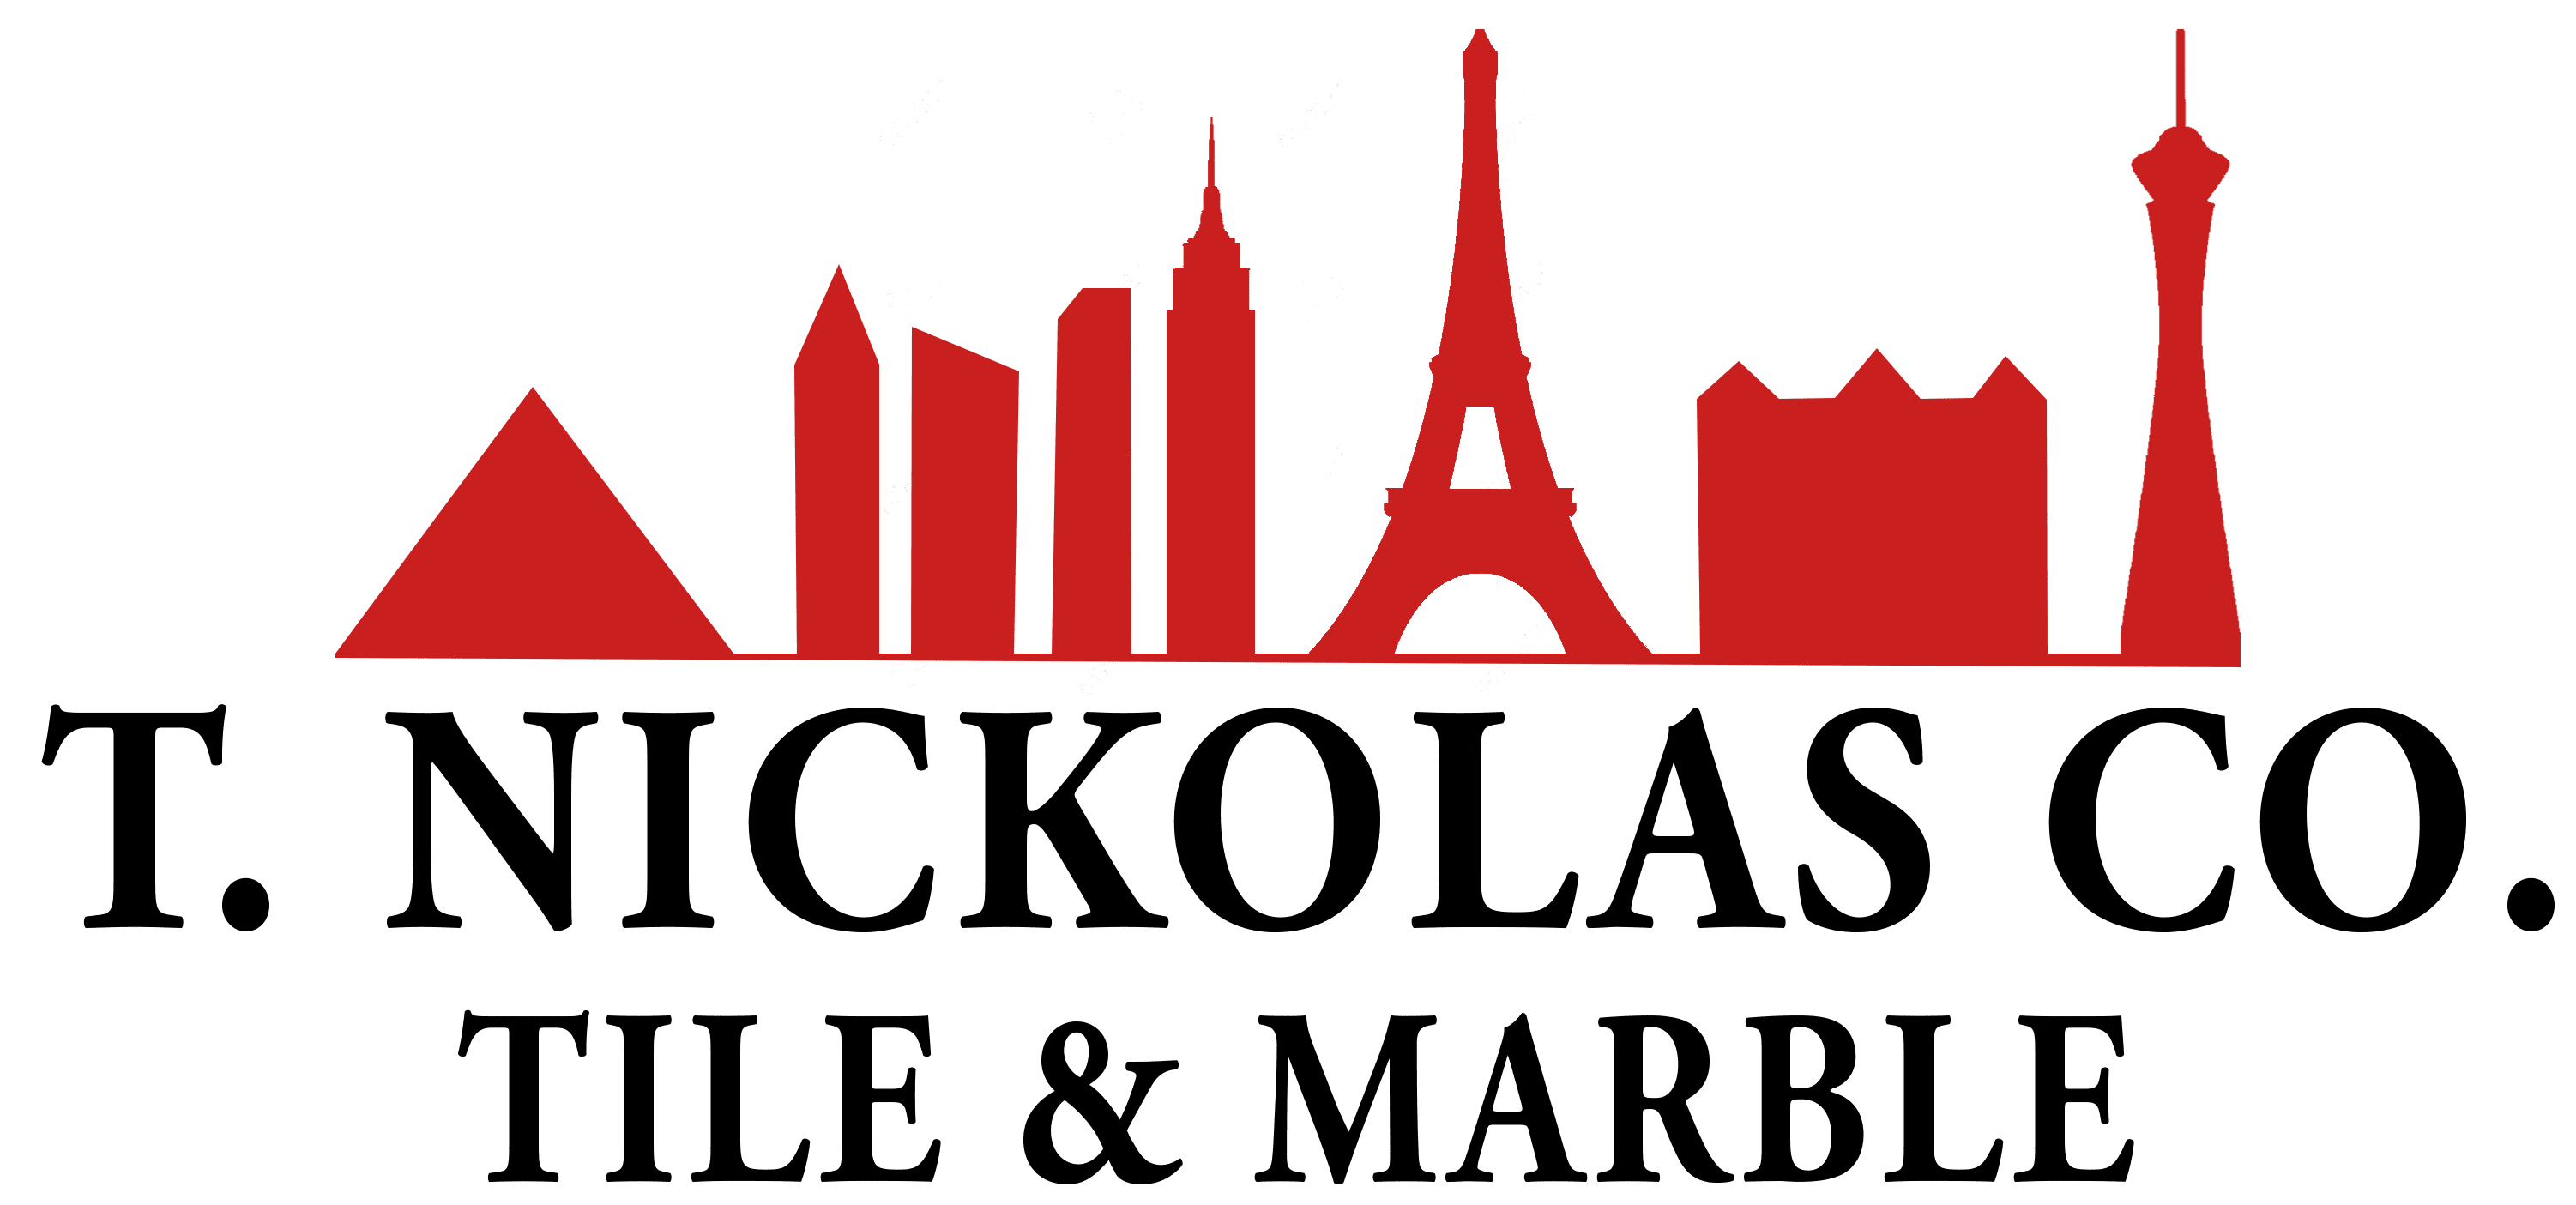 T. Nickolas Co. Tile & Marble